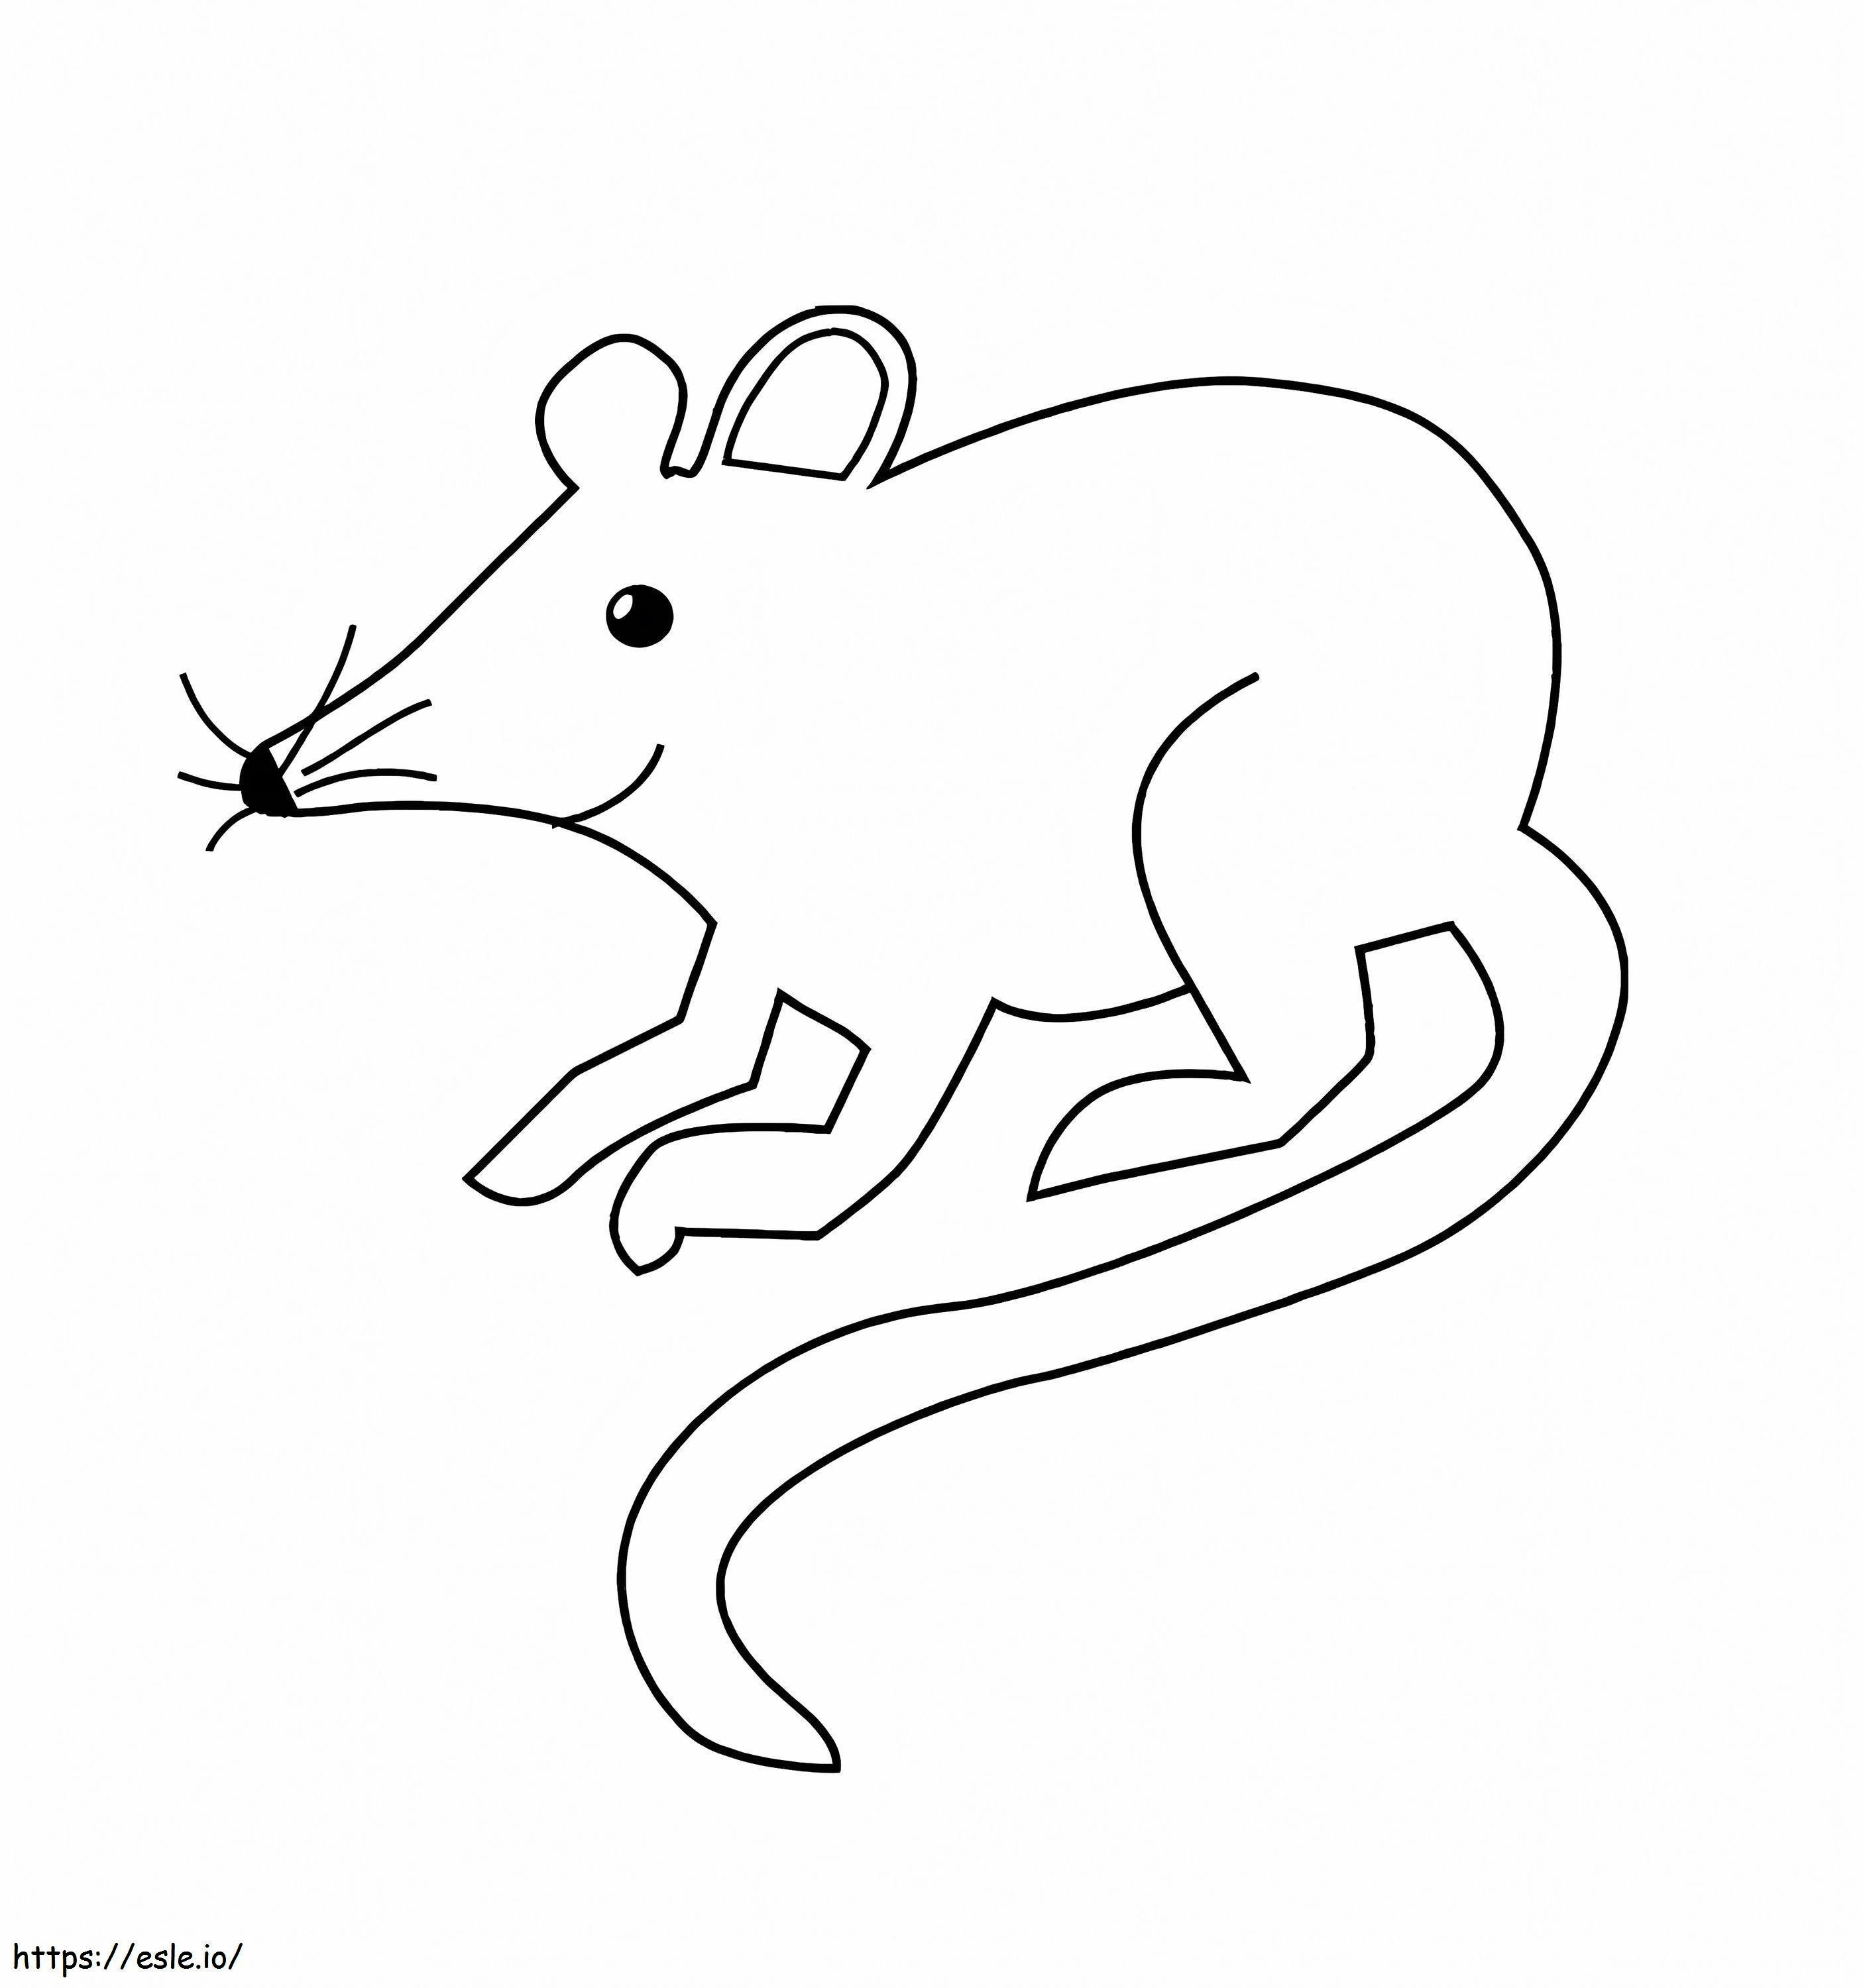 Rato de desenho animado fácil para colorir